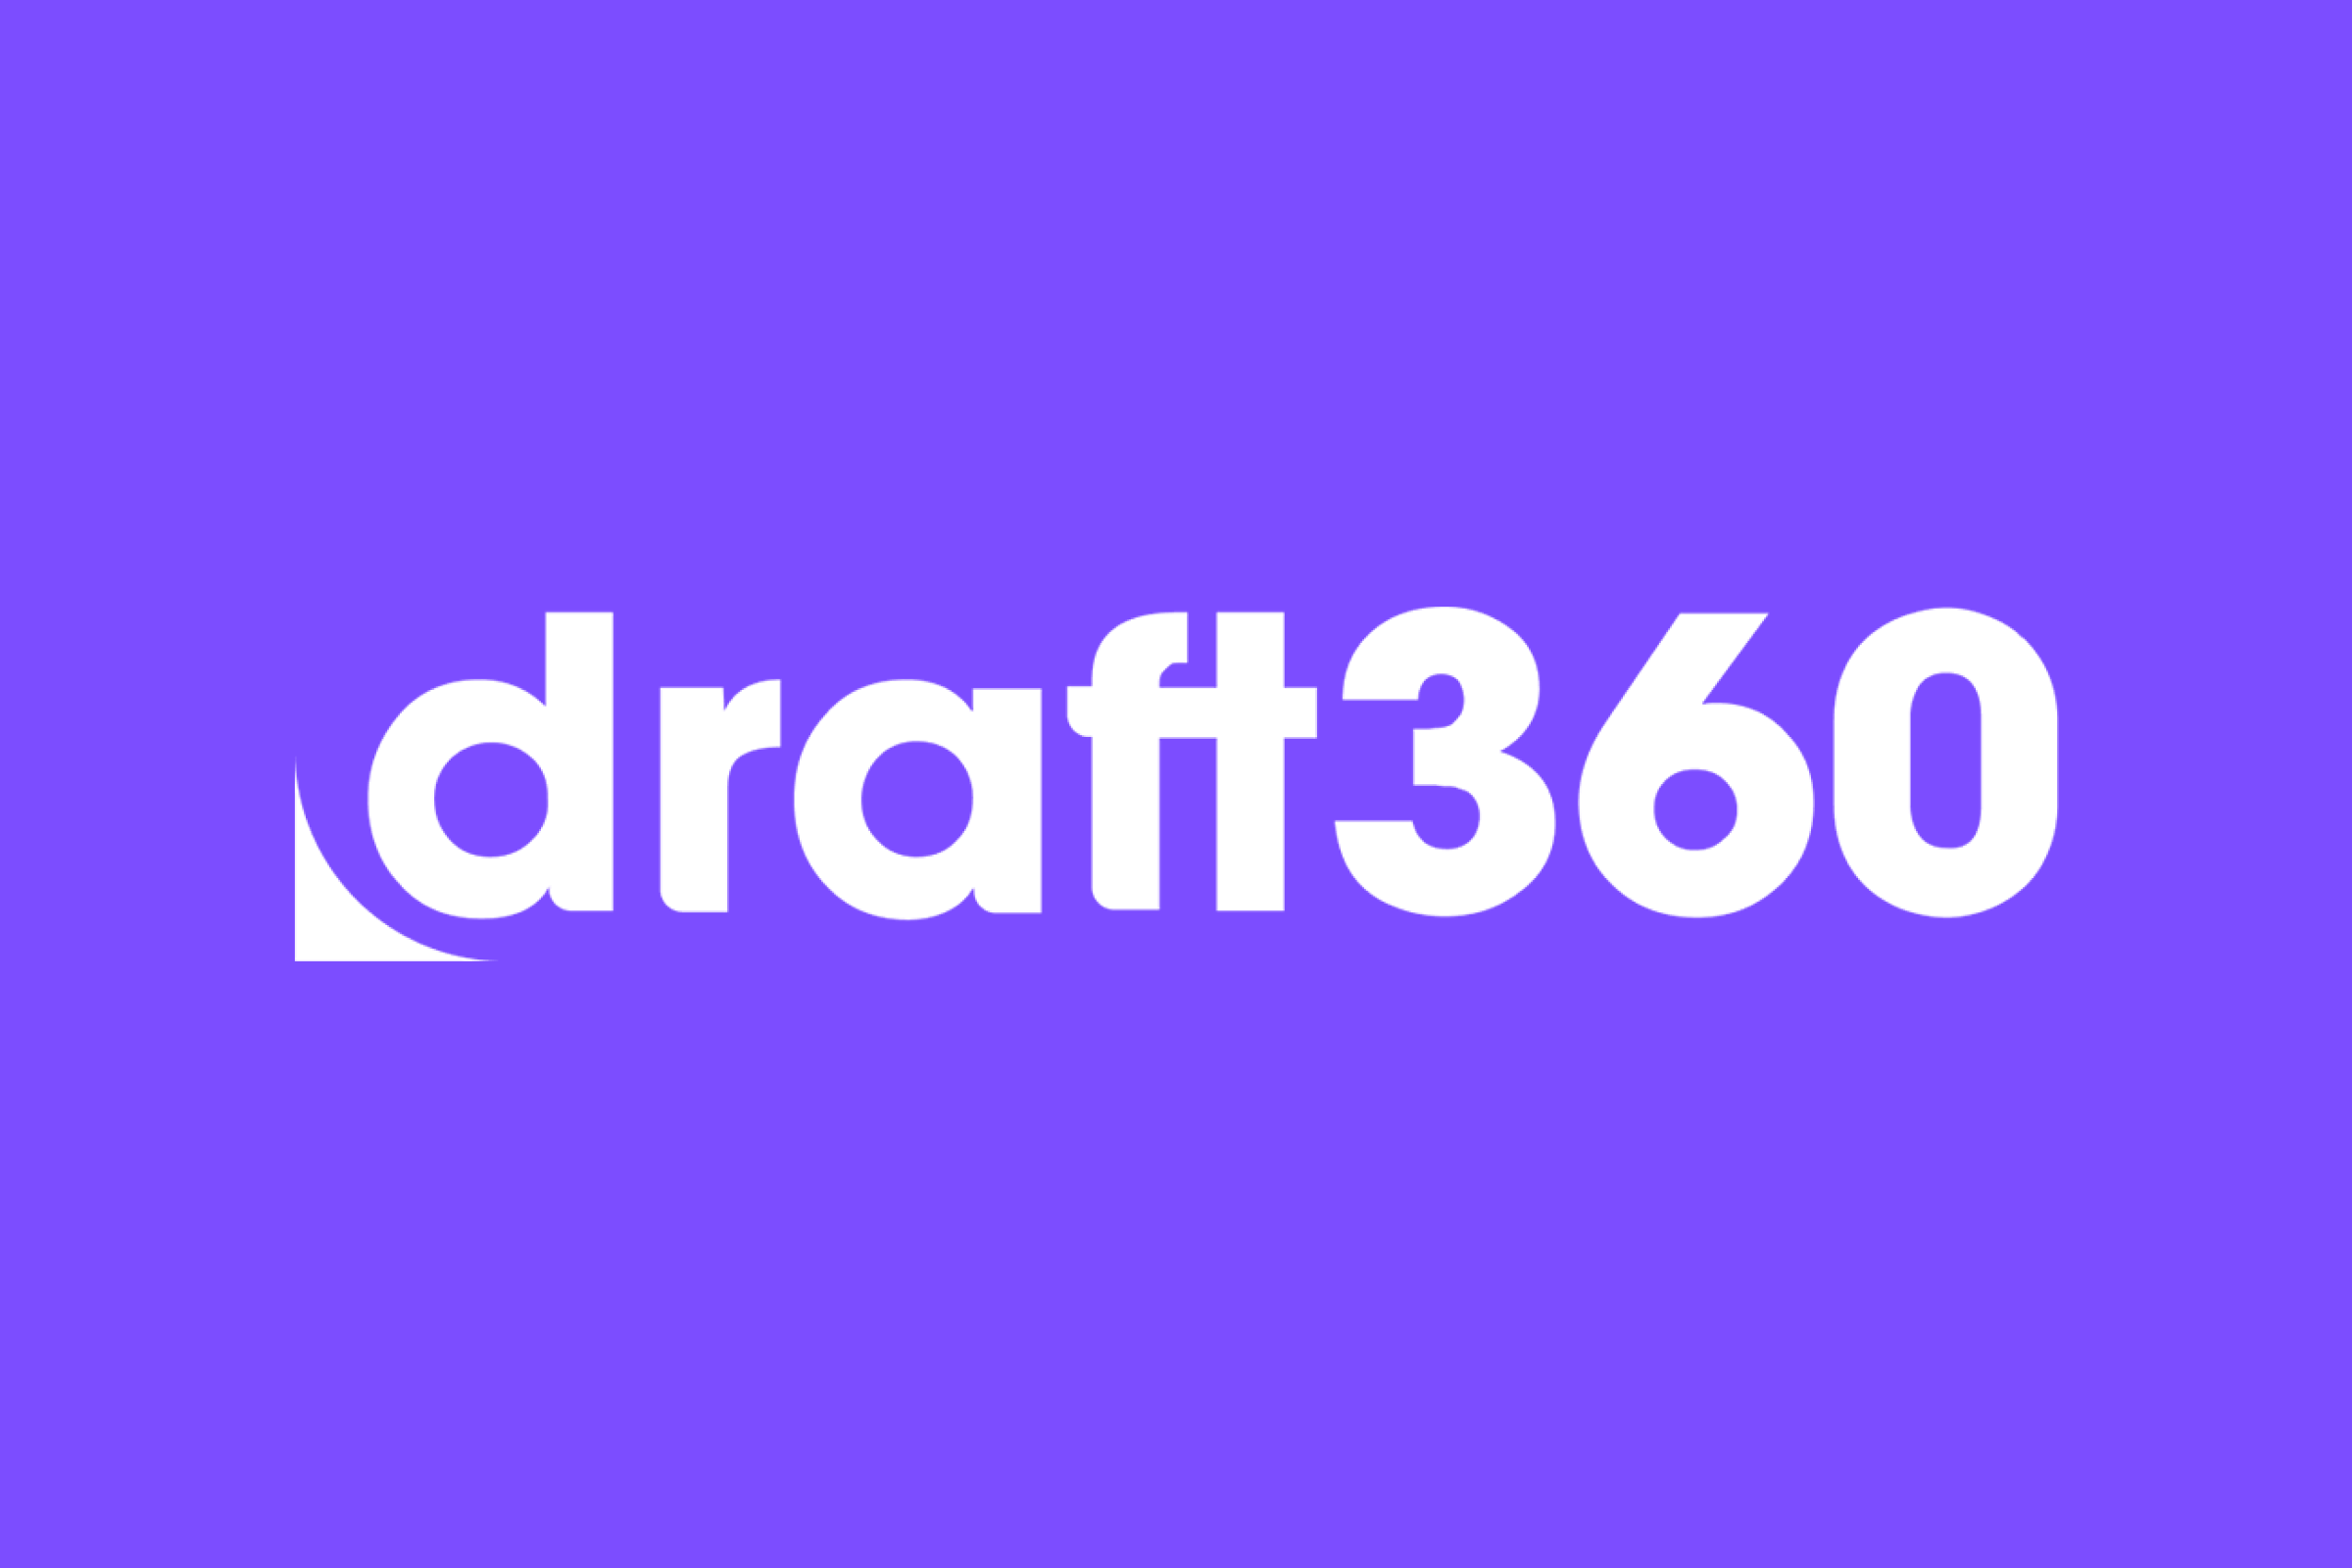 Draft360- Featured Shot